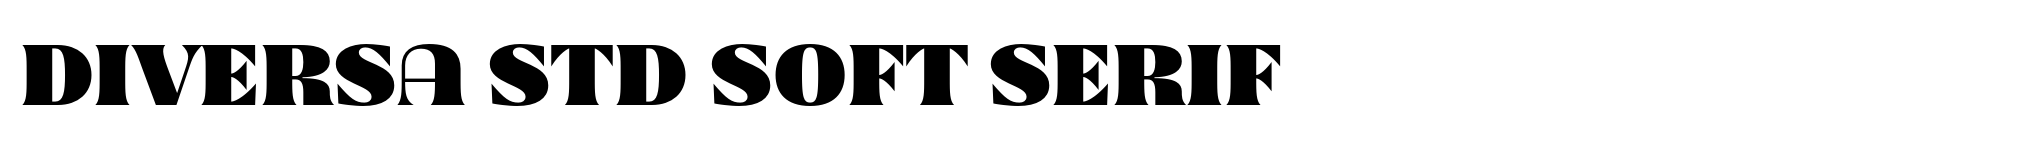 Diversa Std Soft Serif image